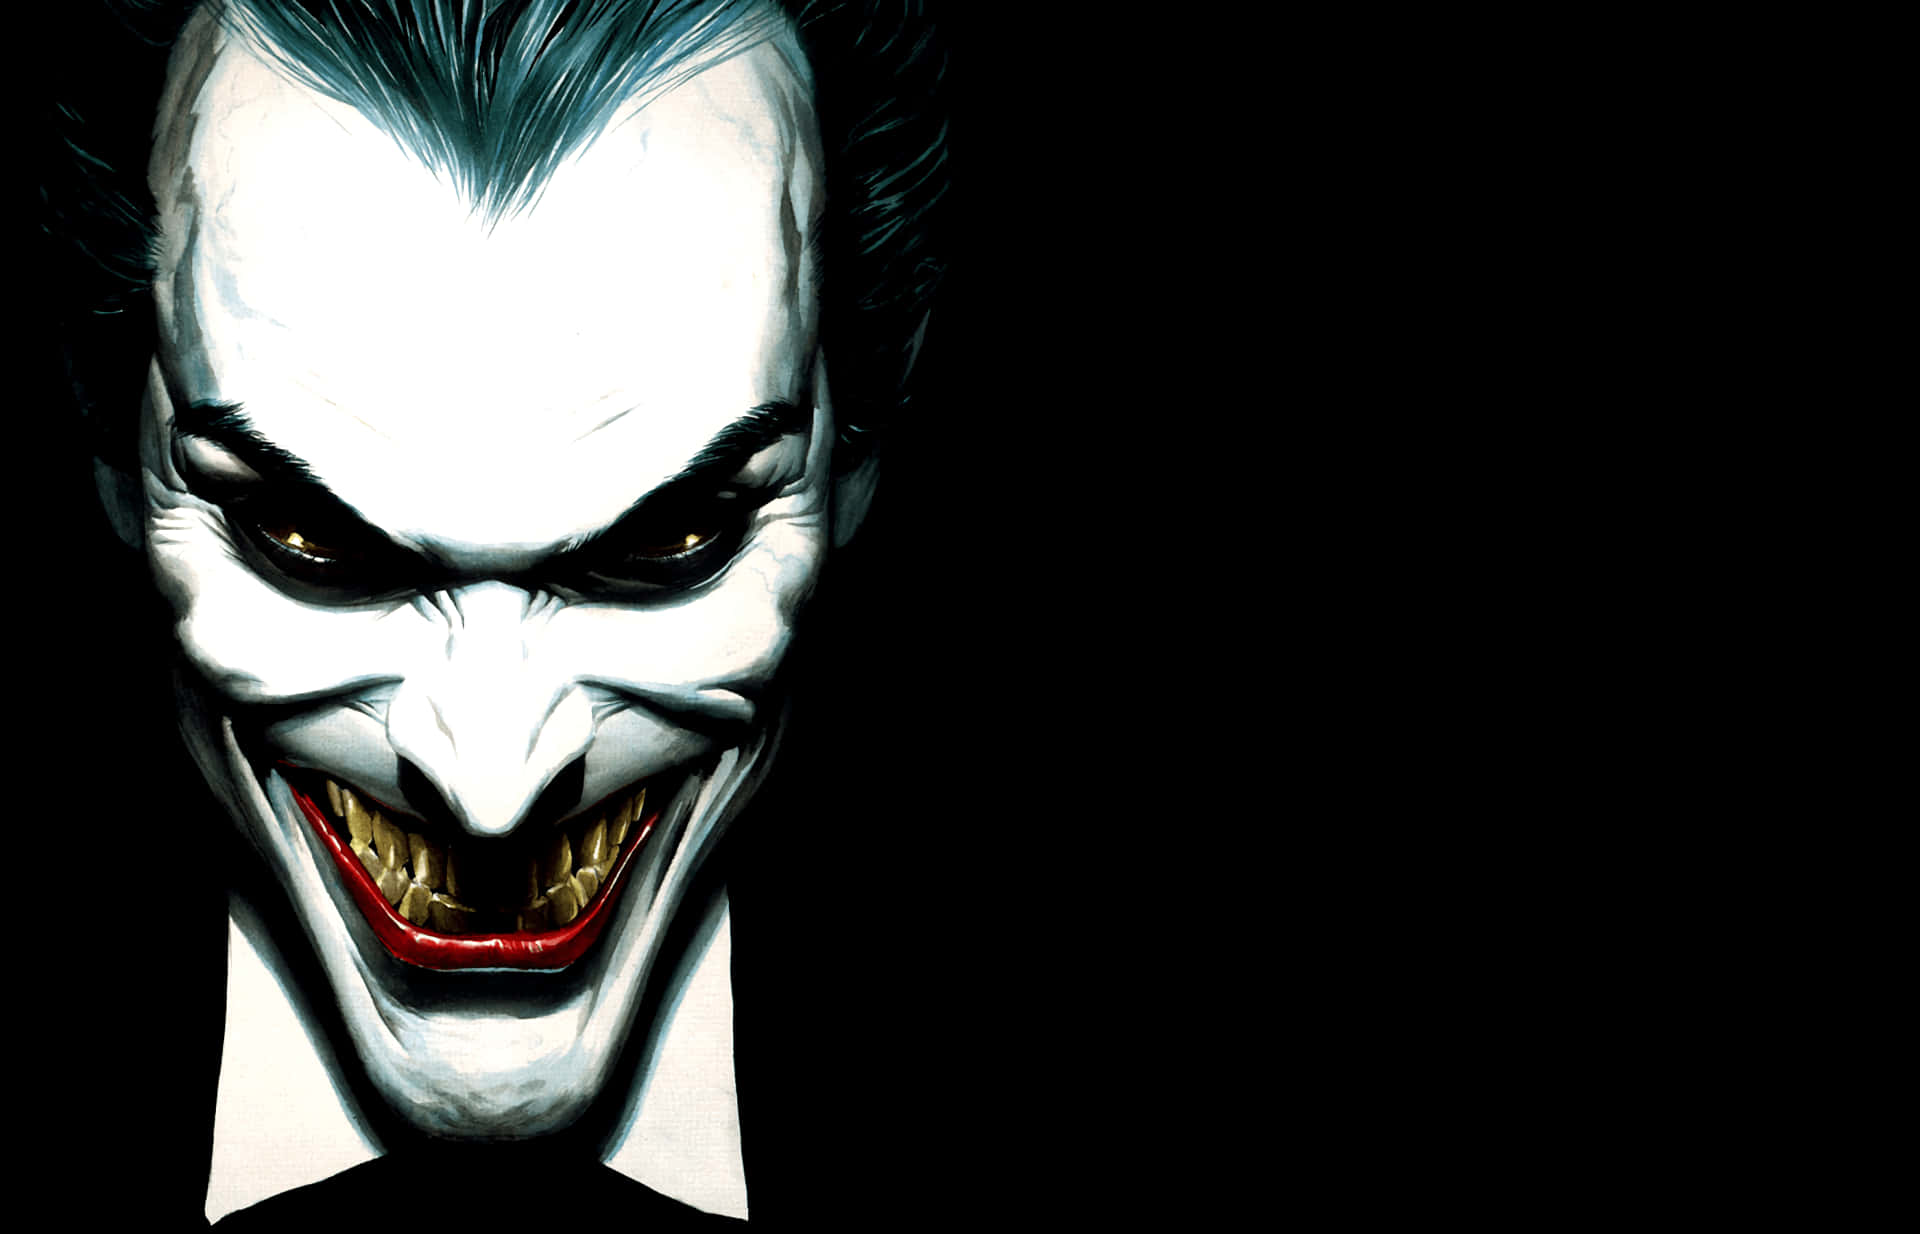 Evil Joker Unleashed - A Menacing Grin Amidst Darkness Wallpaper